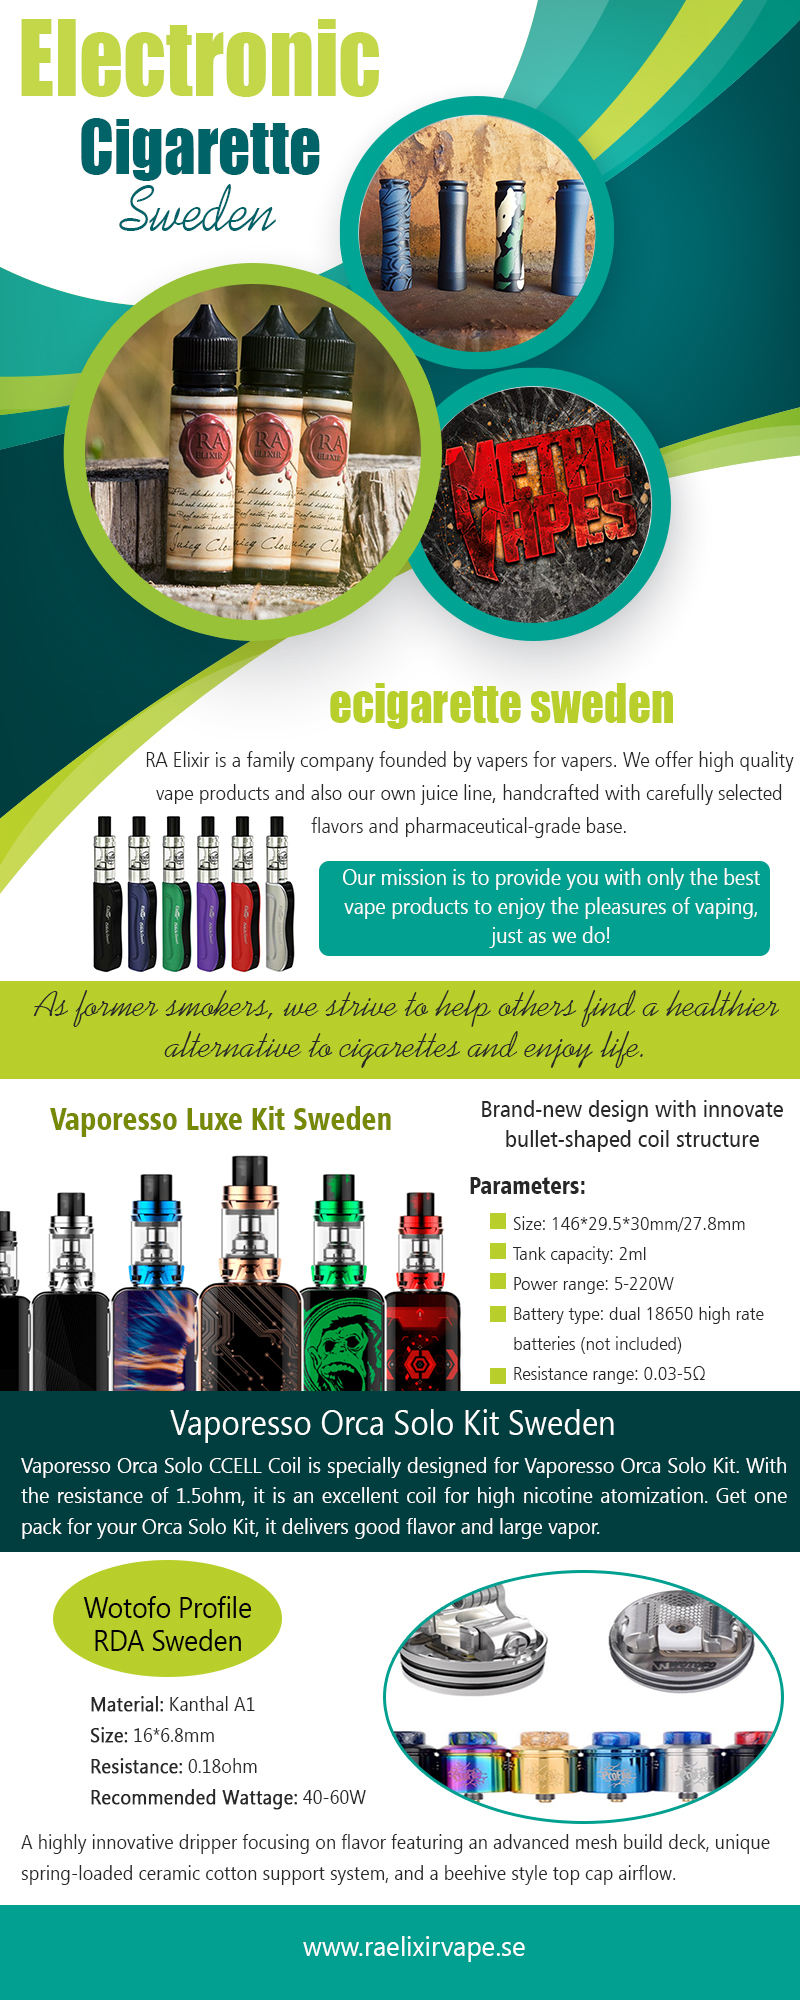 Electronic Cigarette Sweden